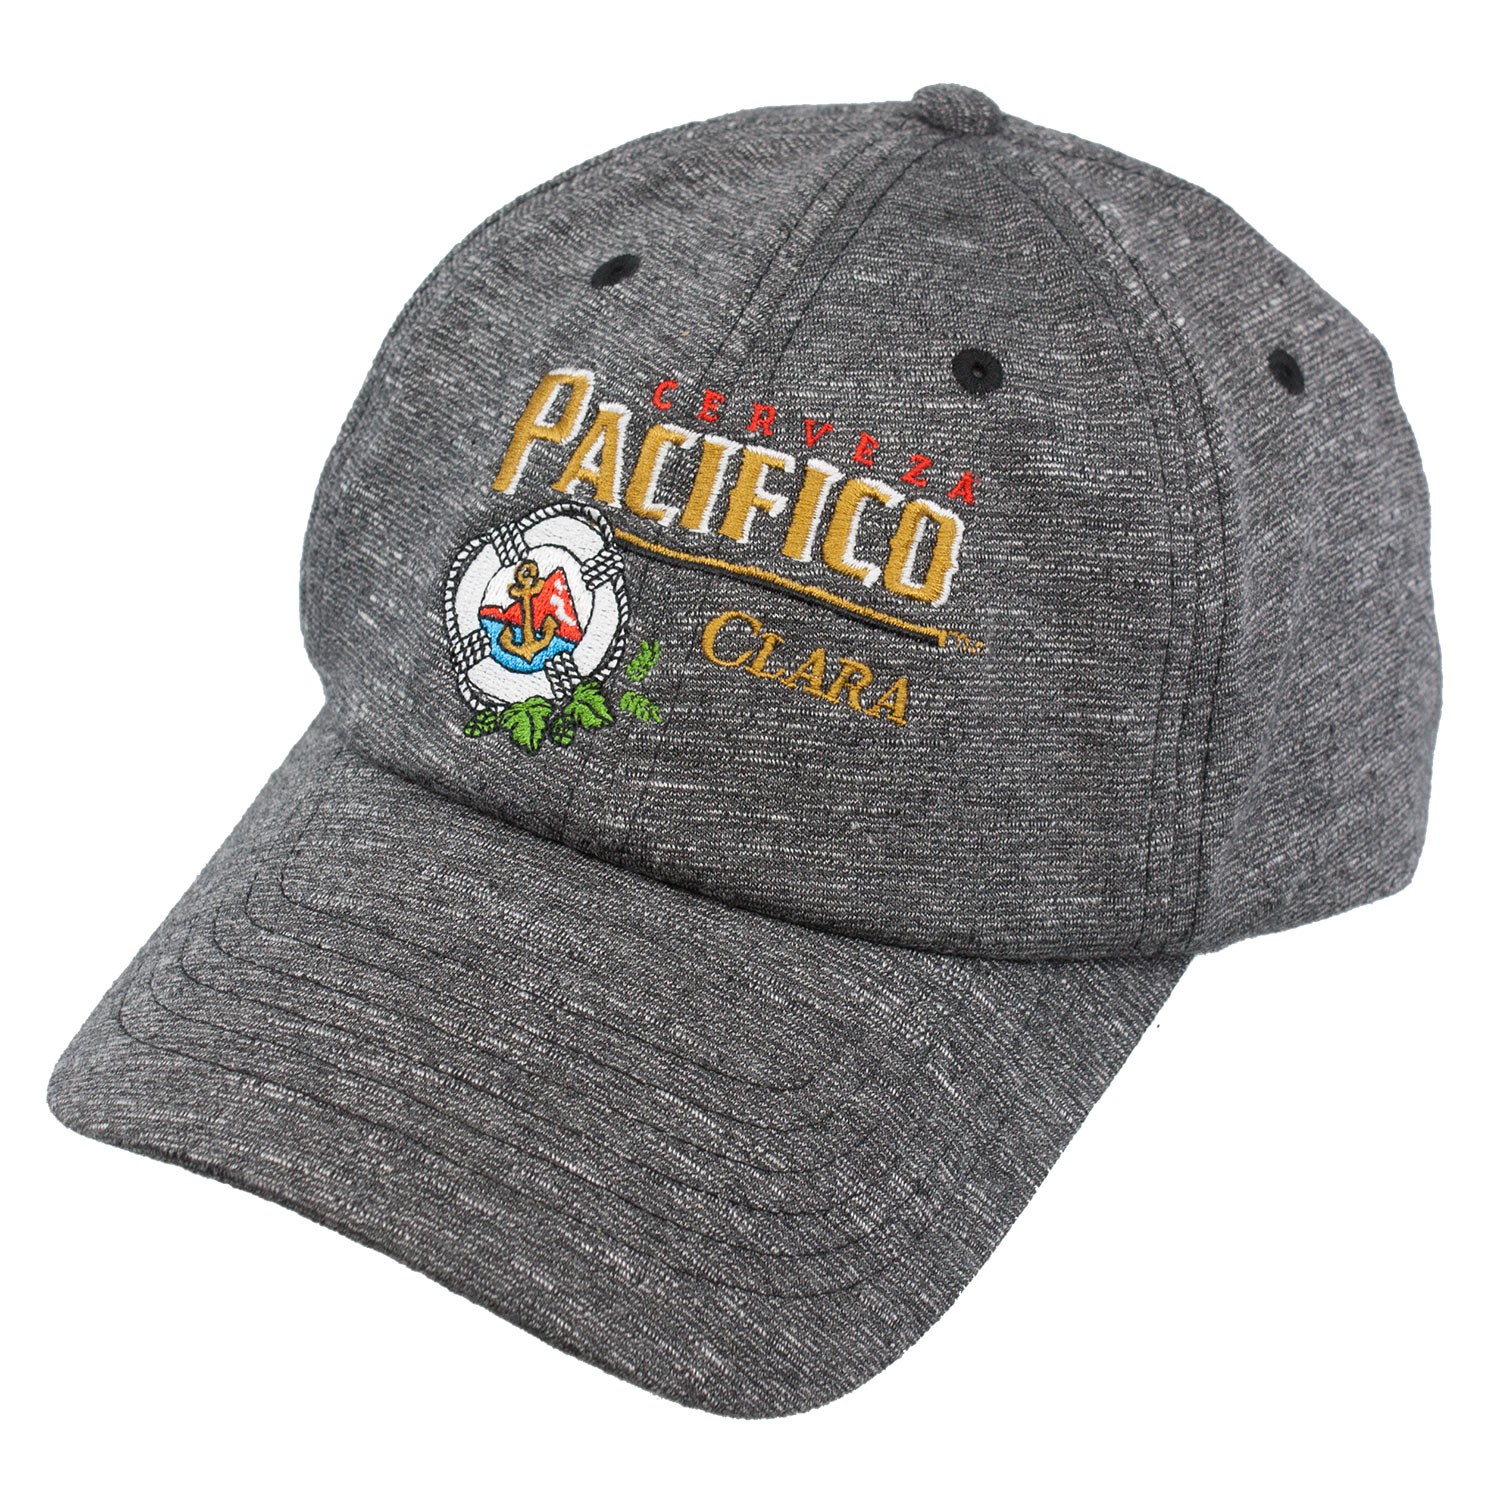 Pacifico Grey Heathered Strapback Hat